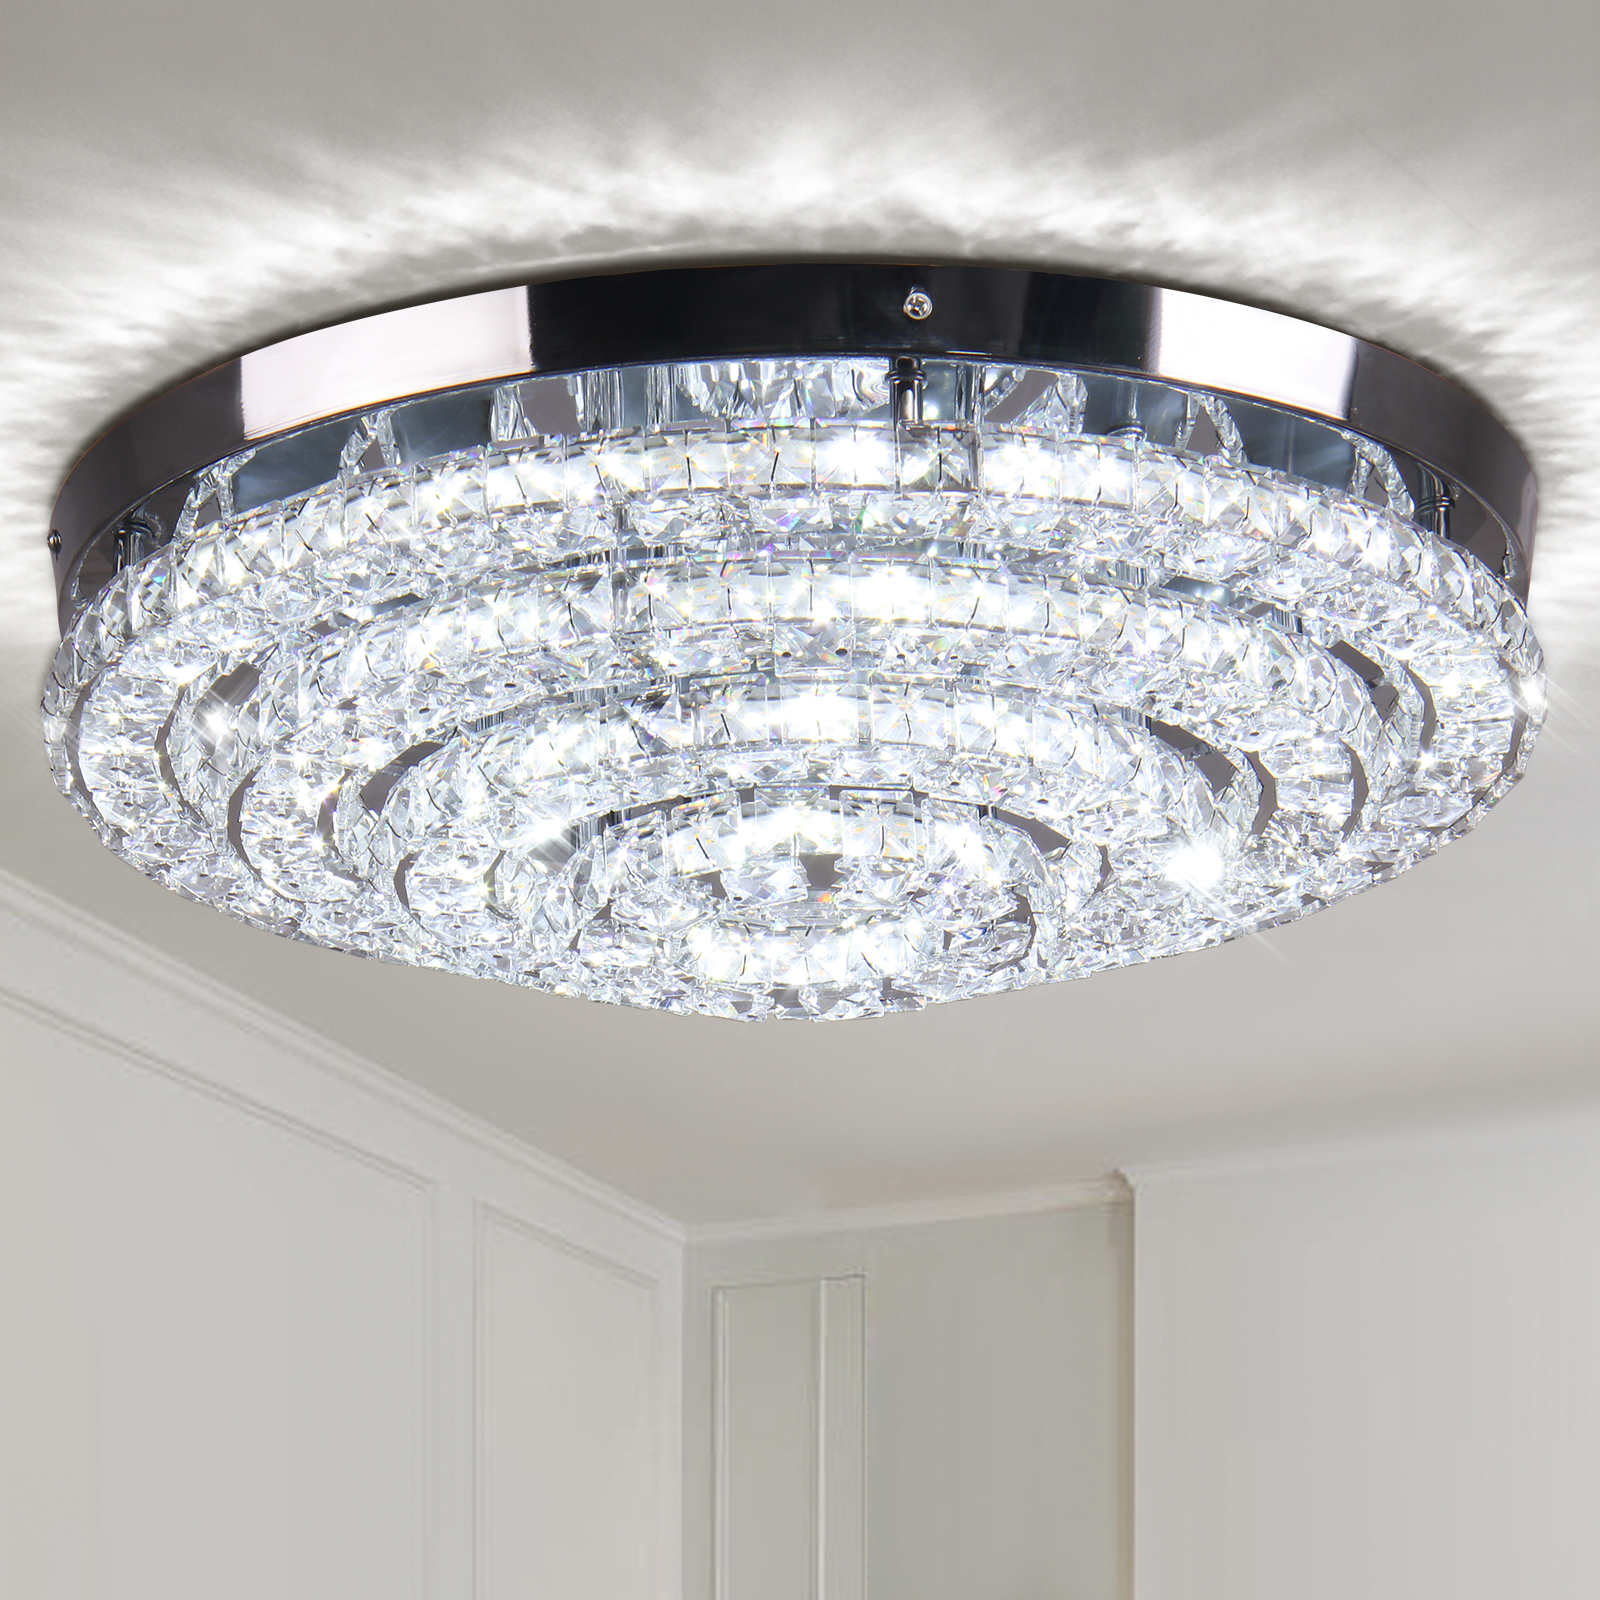 17.7" Crystal Chandelier Modern Flush Mount Ceiling Light Fixture Large LED Chandeliers for Bedrooms Living Room Dining Room